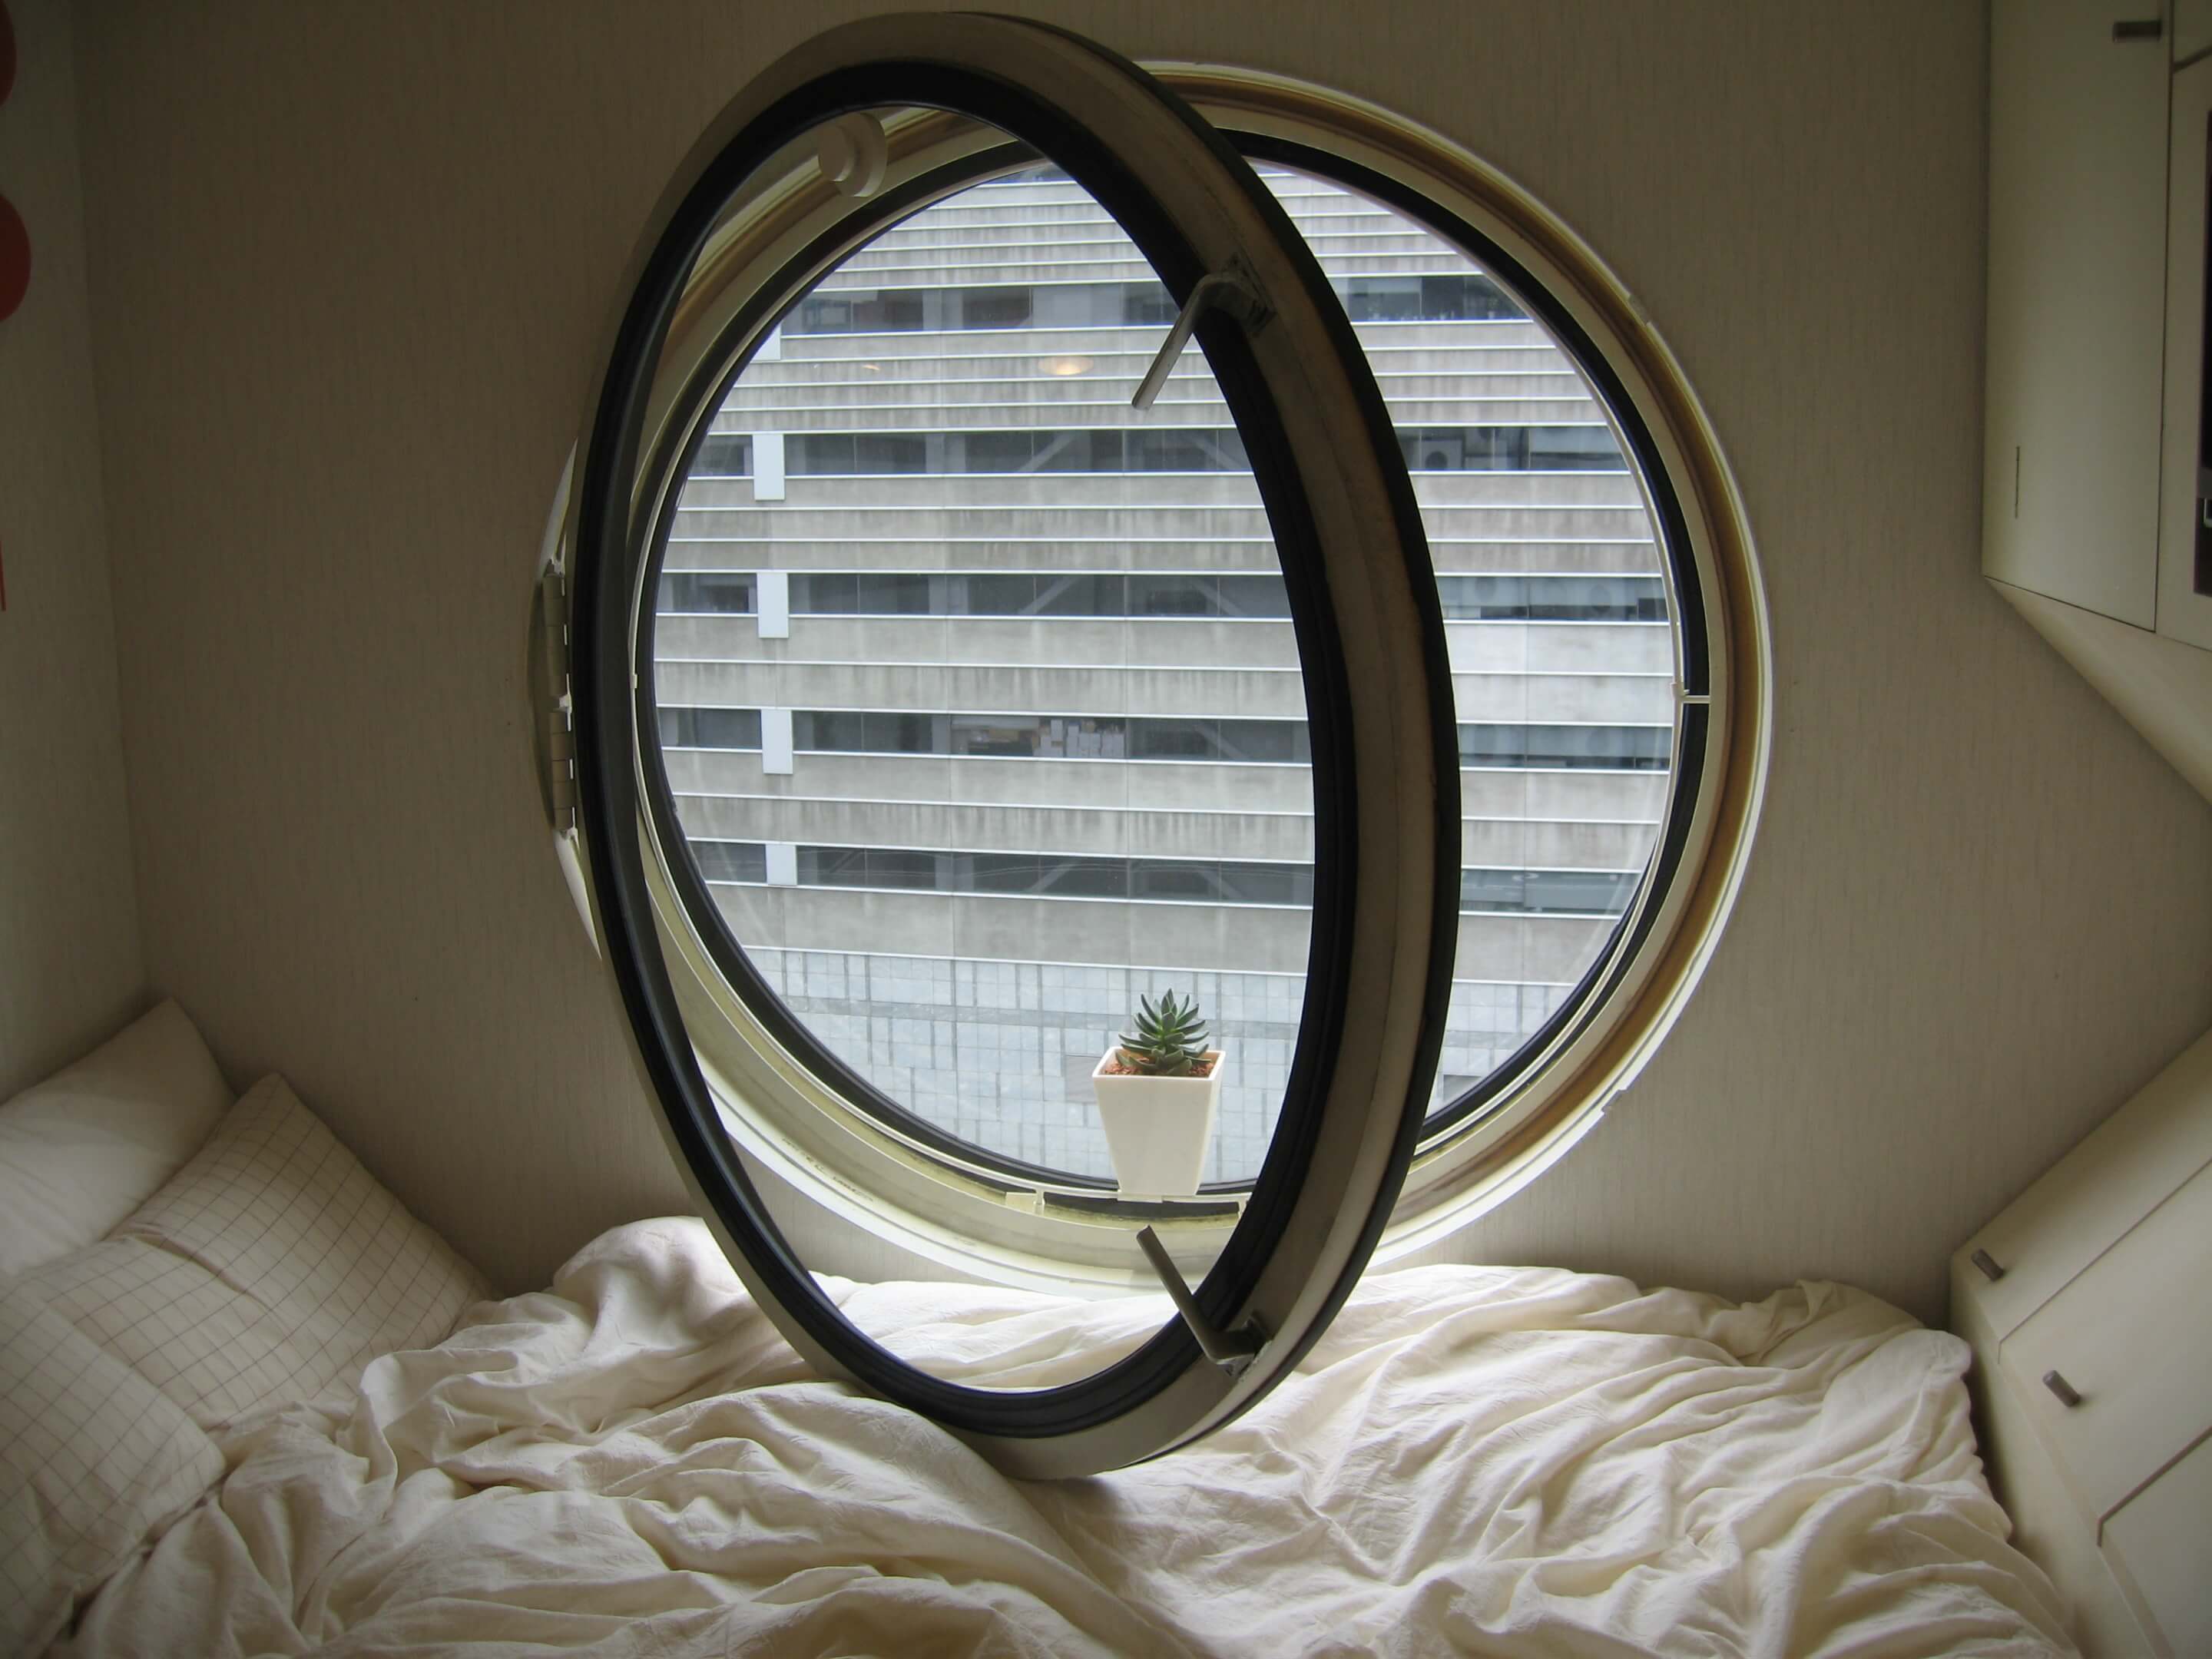 a large circular window inside a tiny apartment.